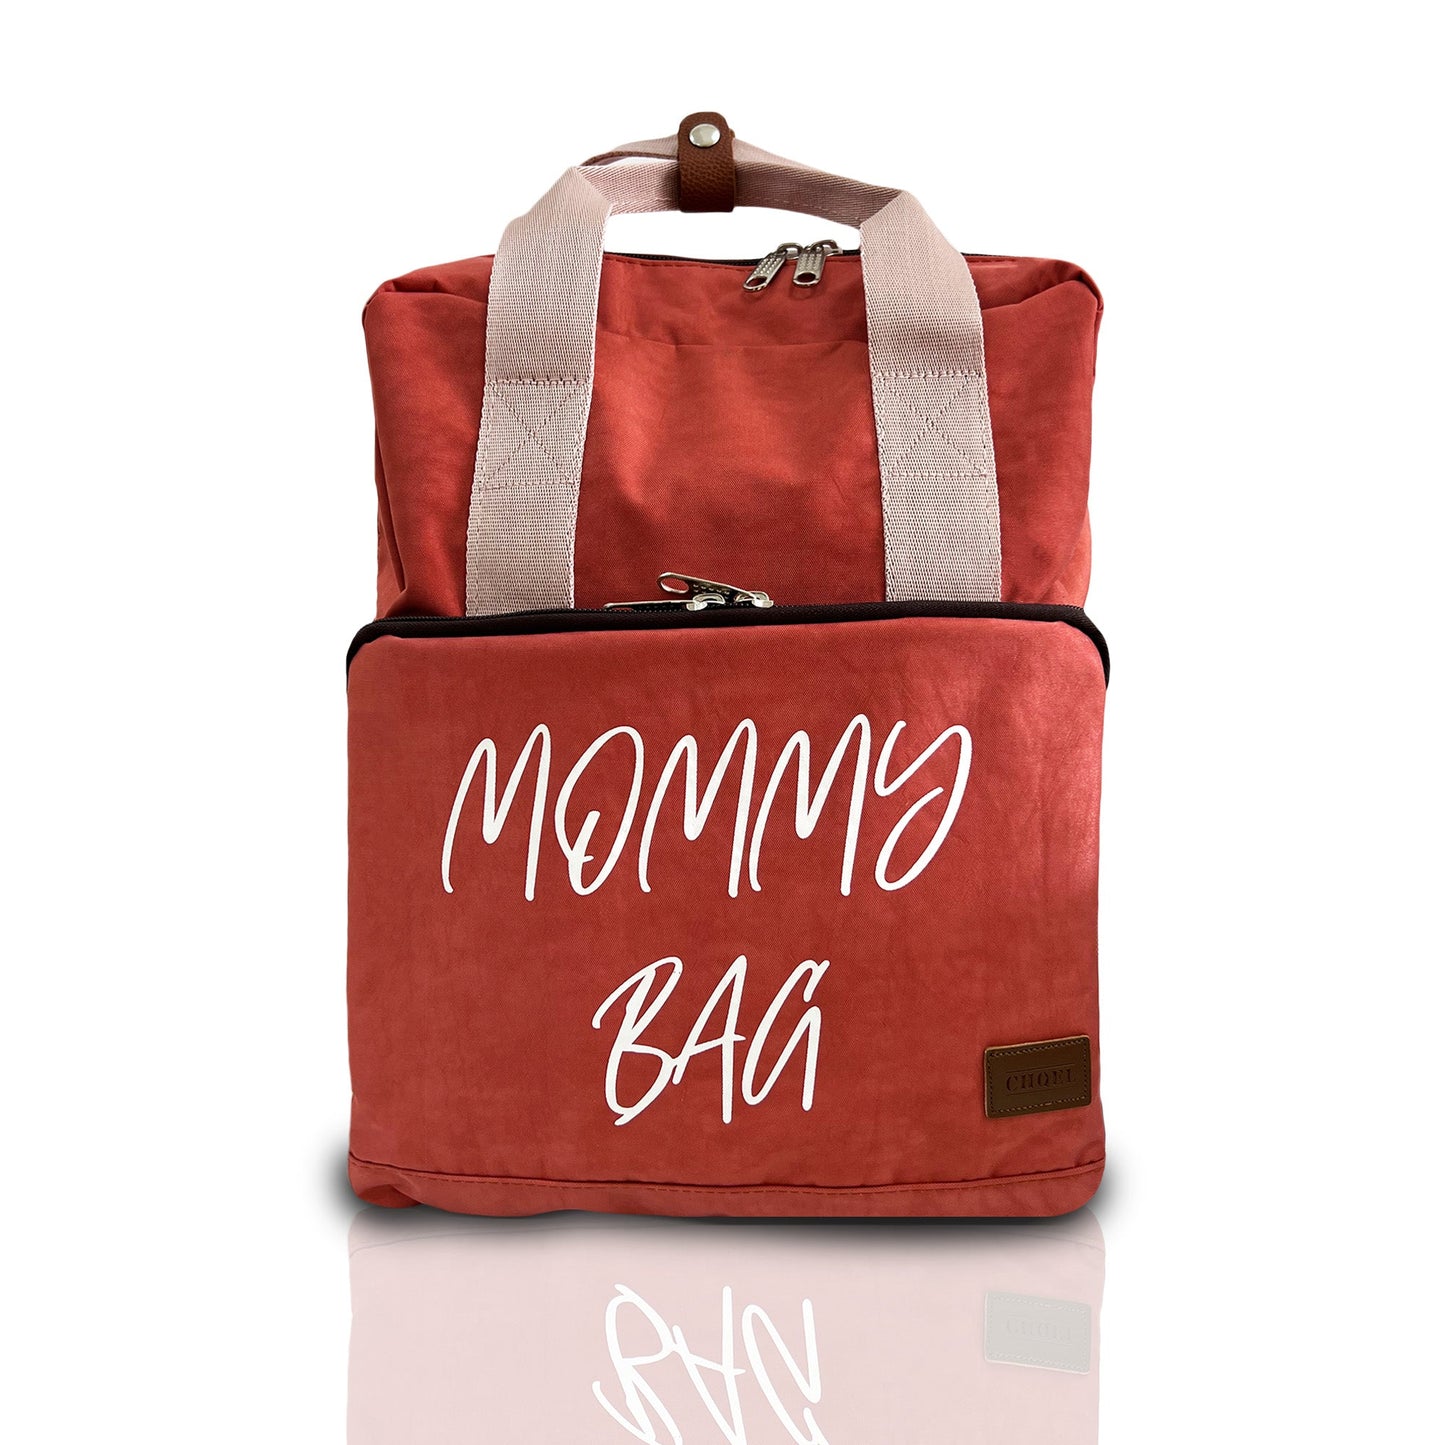 CHQEL Mommy Bag Backpack, Mommy Baby Care, Hospital, Maternity, Mommy Bag for Hospital, Travel Backpack with Thermal Compartment ürününün kopyası ürününün kopyası ürününün kopyası ürününün kopyası ürününün kopyası - CHQEL